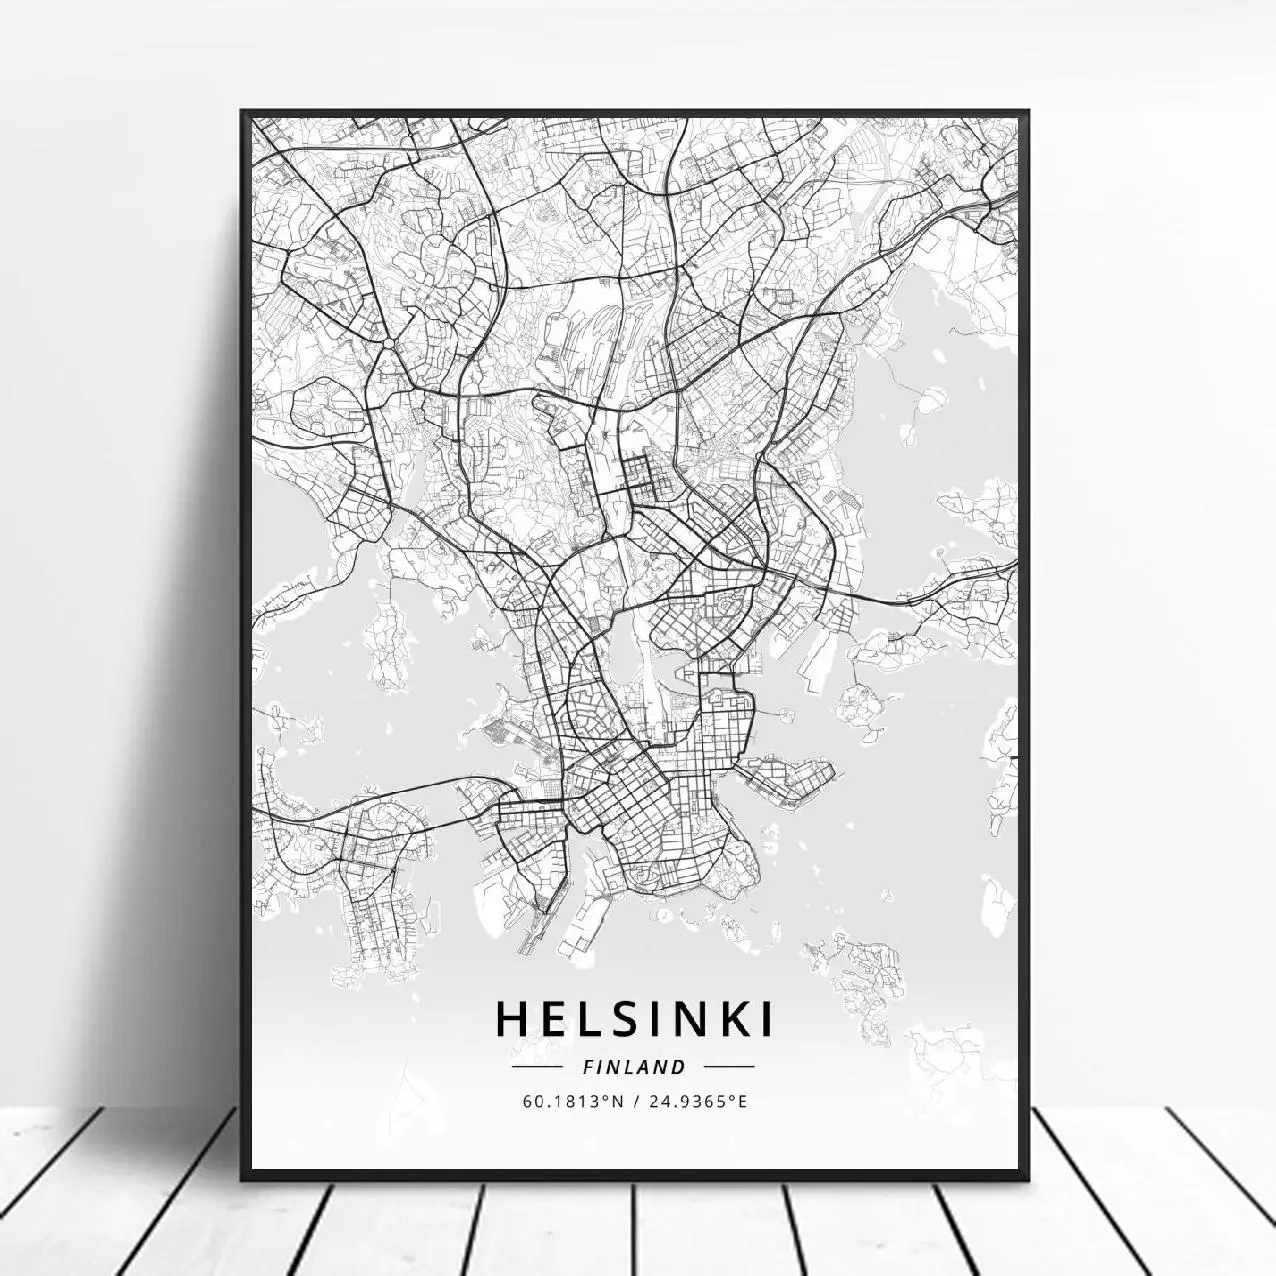 Эспоо Kokkola Turku Lappeenranta Helsinki Tampere Finland холст Художественная карта Плакат